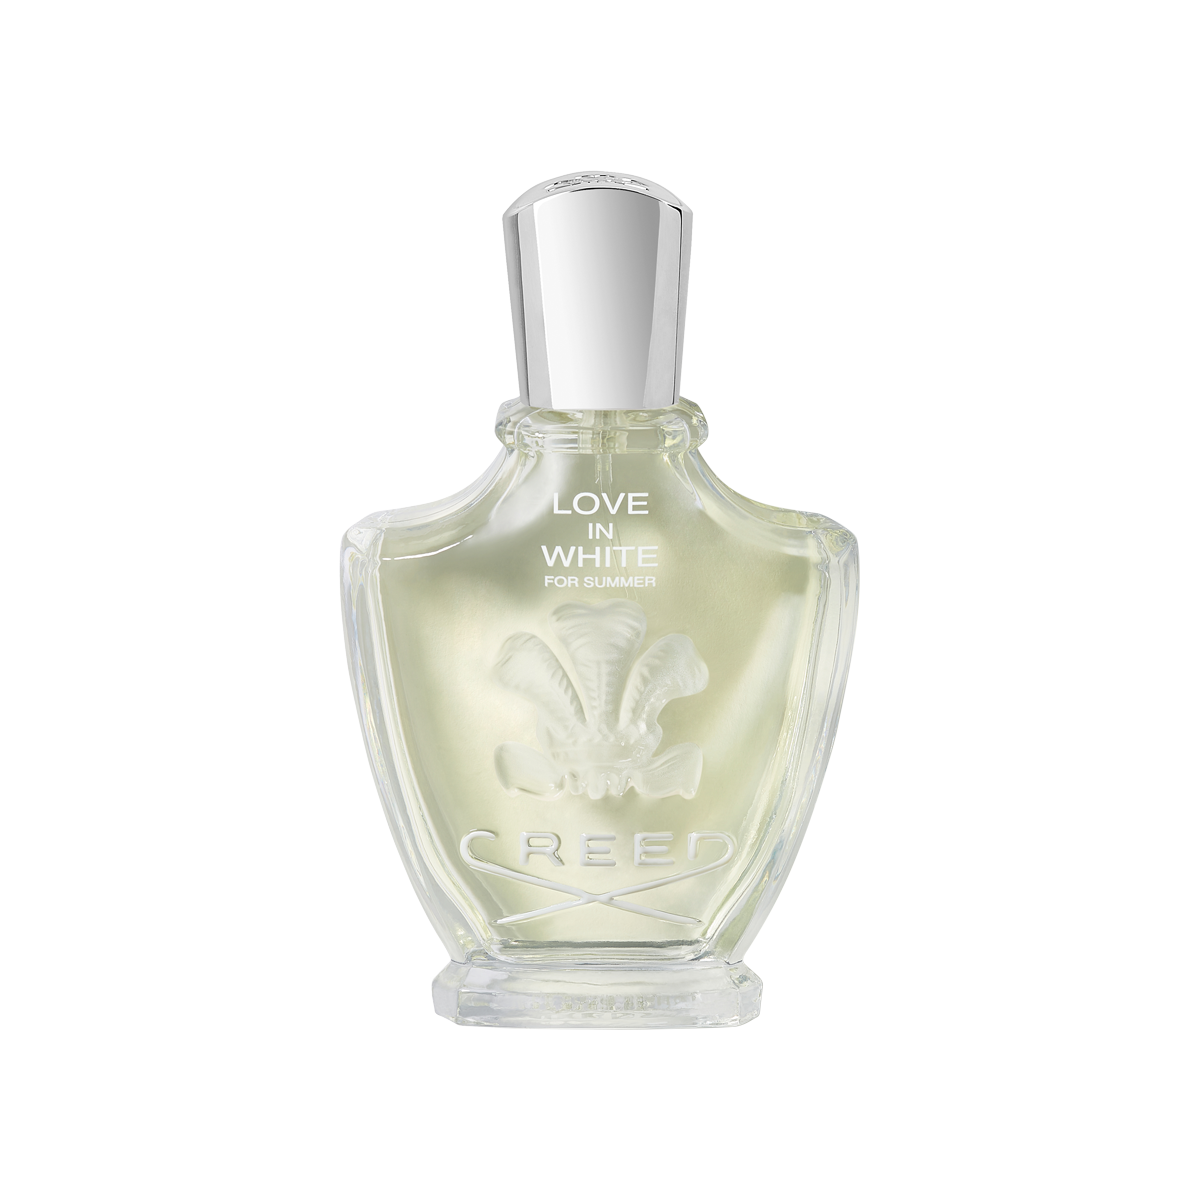 Creed - Love in White For Summer Eau de Parfum